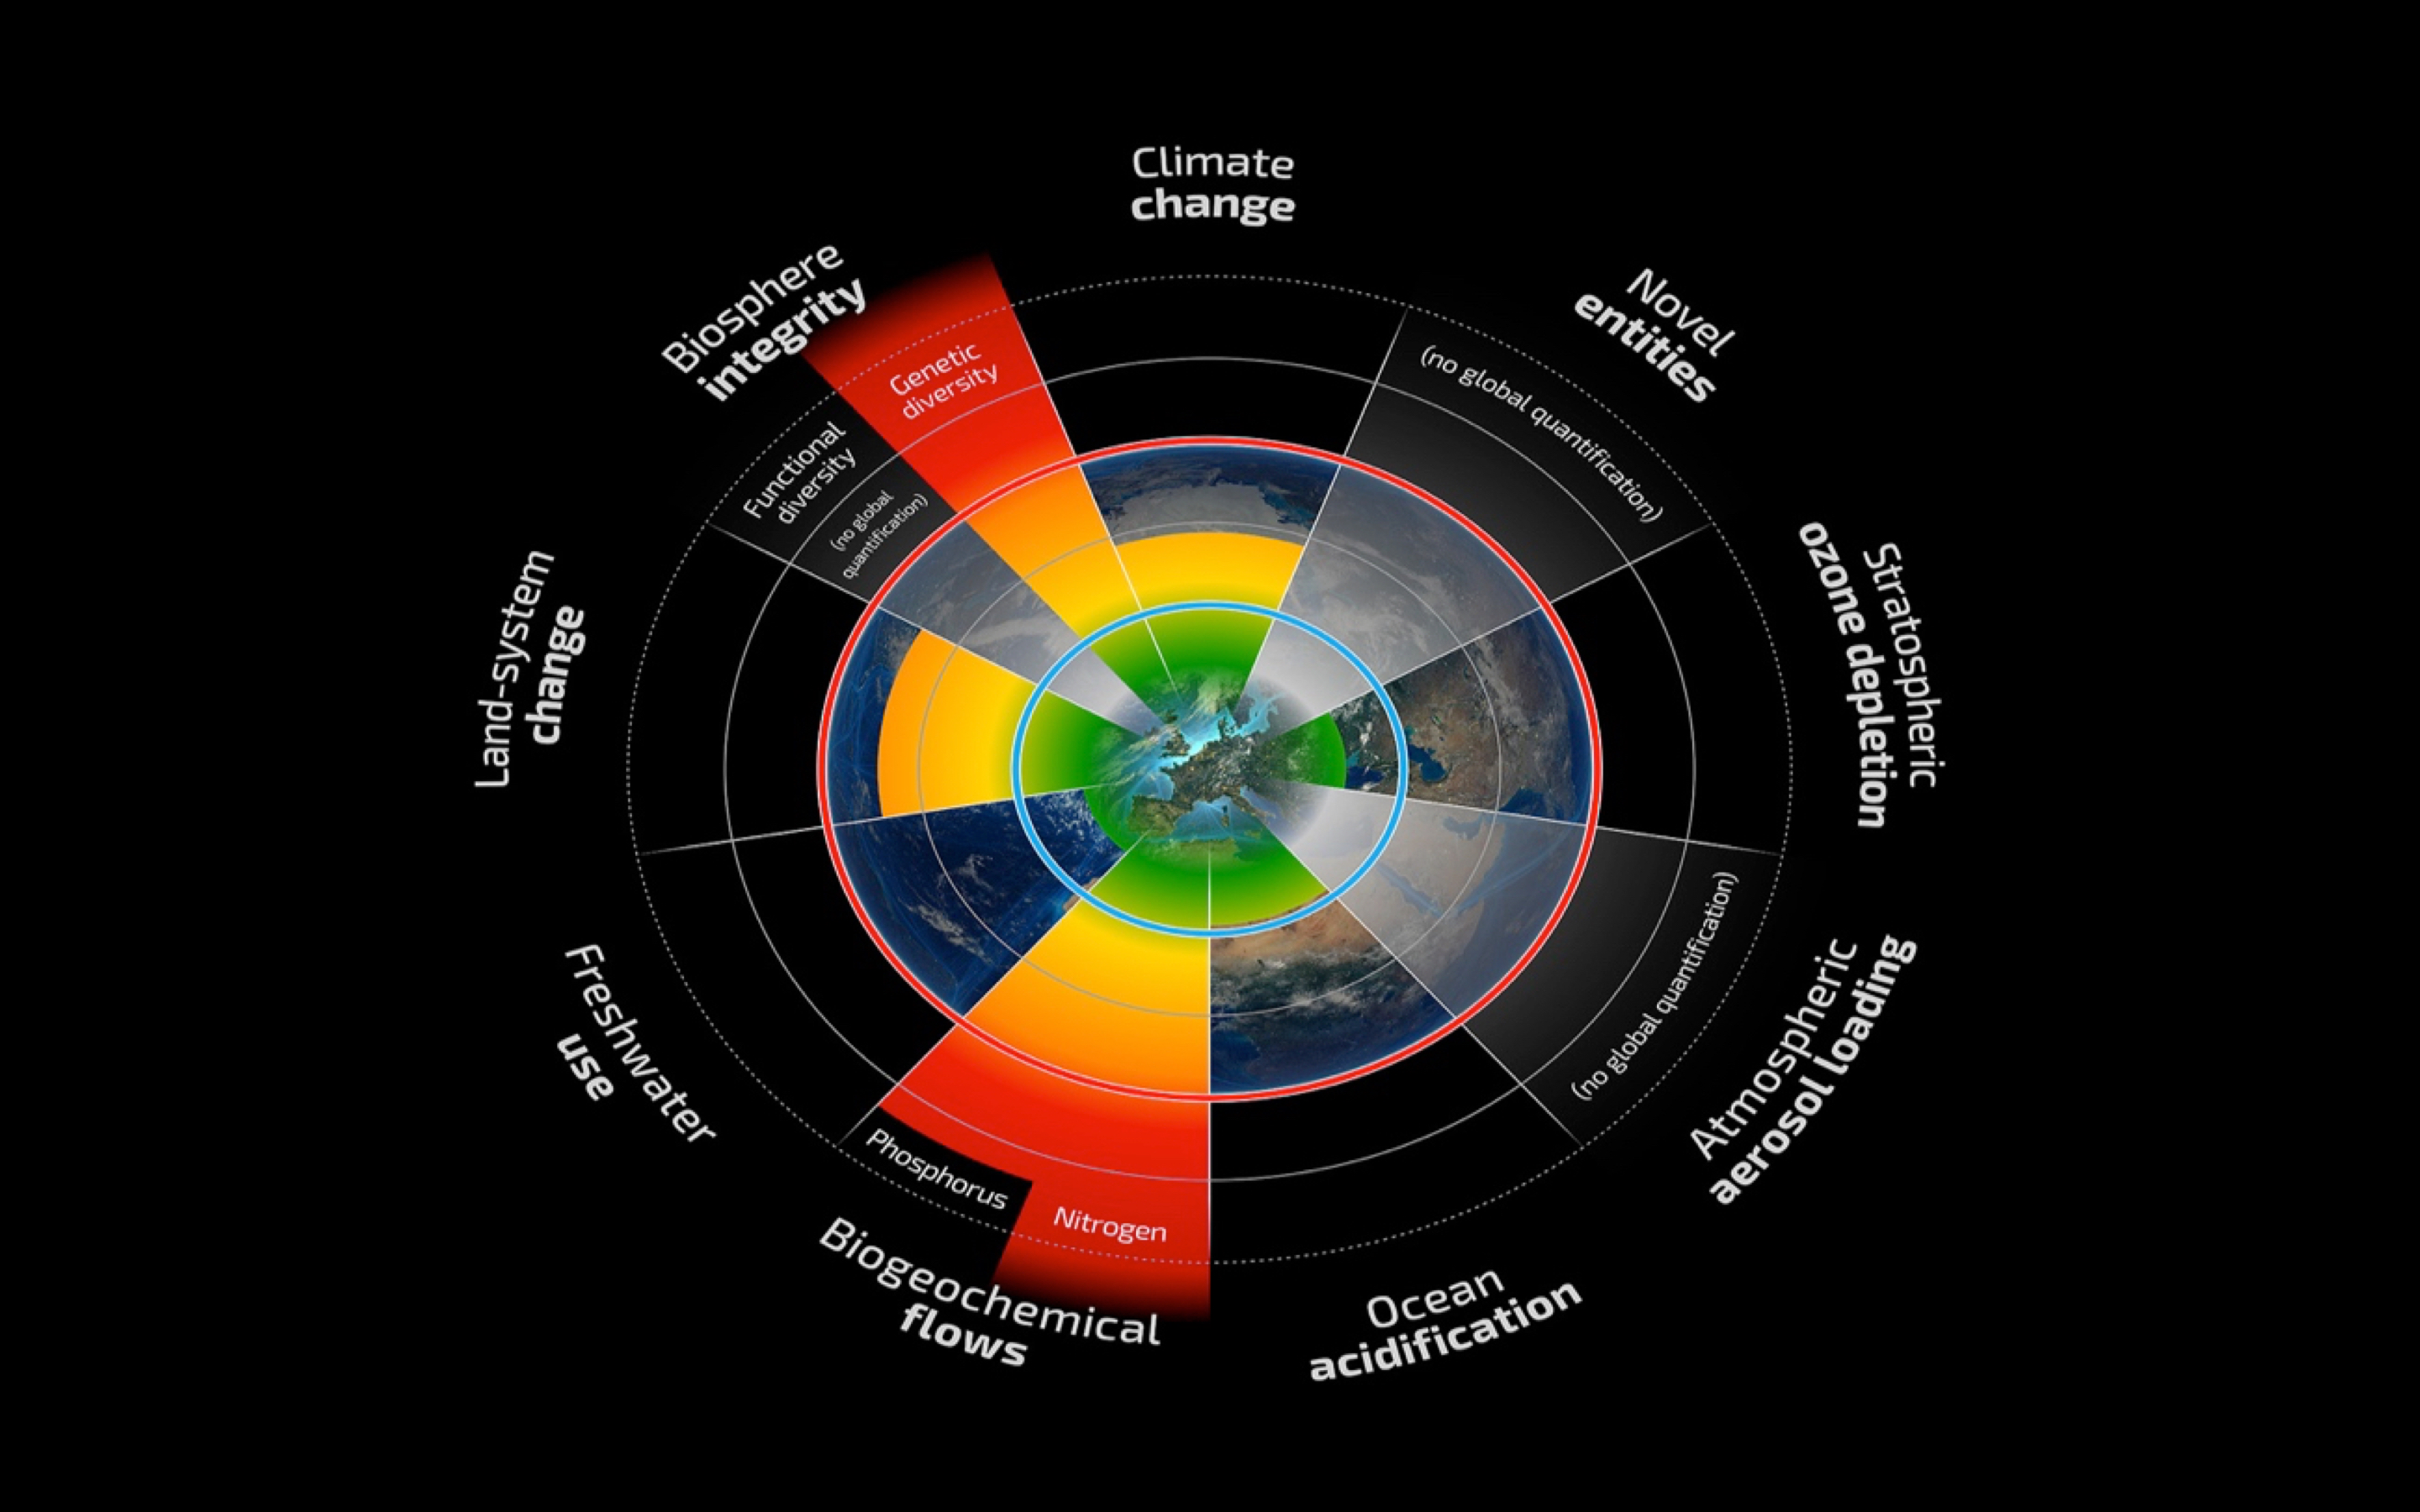 The planetary boundaries framework